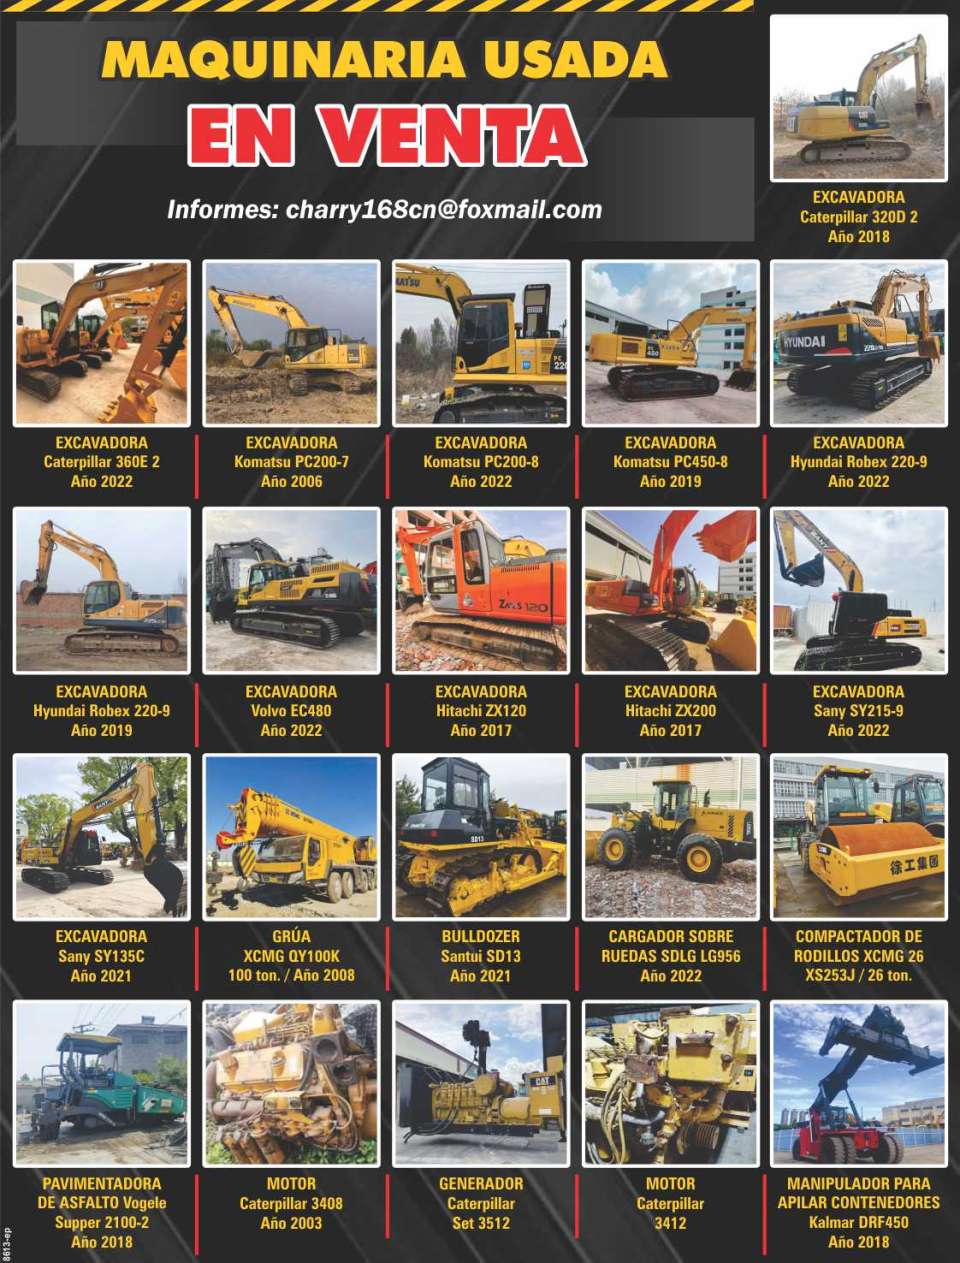 Used Heavy Equipment for Sale: Excavators, Cranes, Bulldozer, Roller Compactor, Wheel Loader, Asphalt Paver, Caterpillar Engine, Generator, Container reach stacker